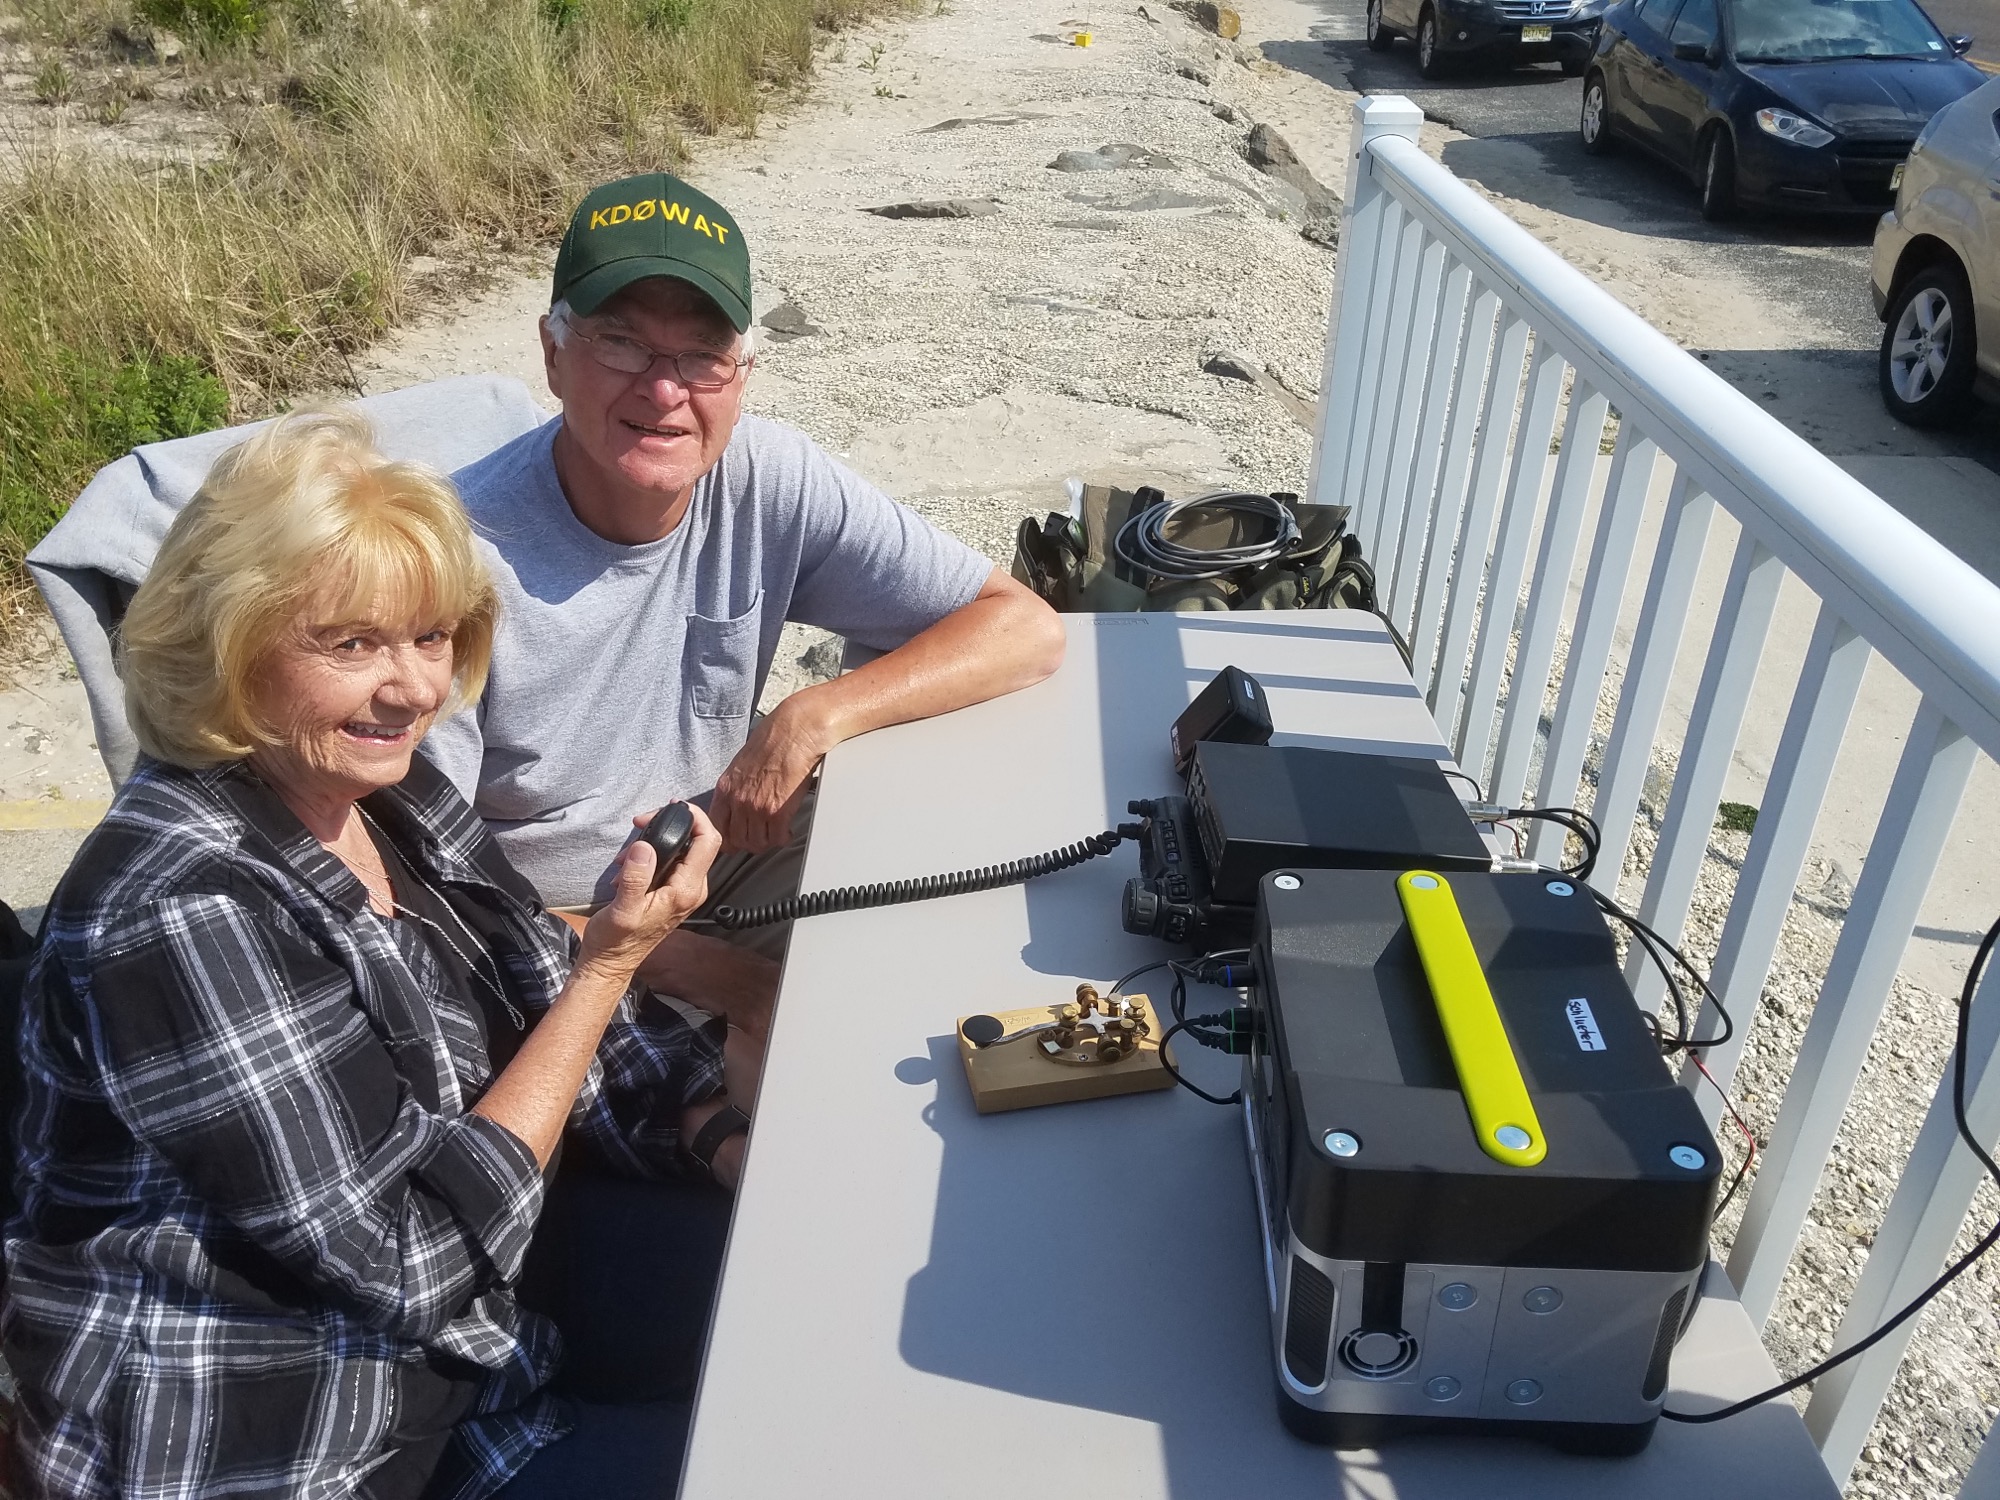 Barbara and Wayne Schlueter brought their ham radio equipment to the beach June 1